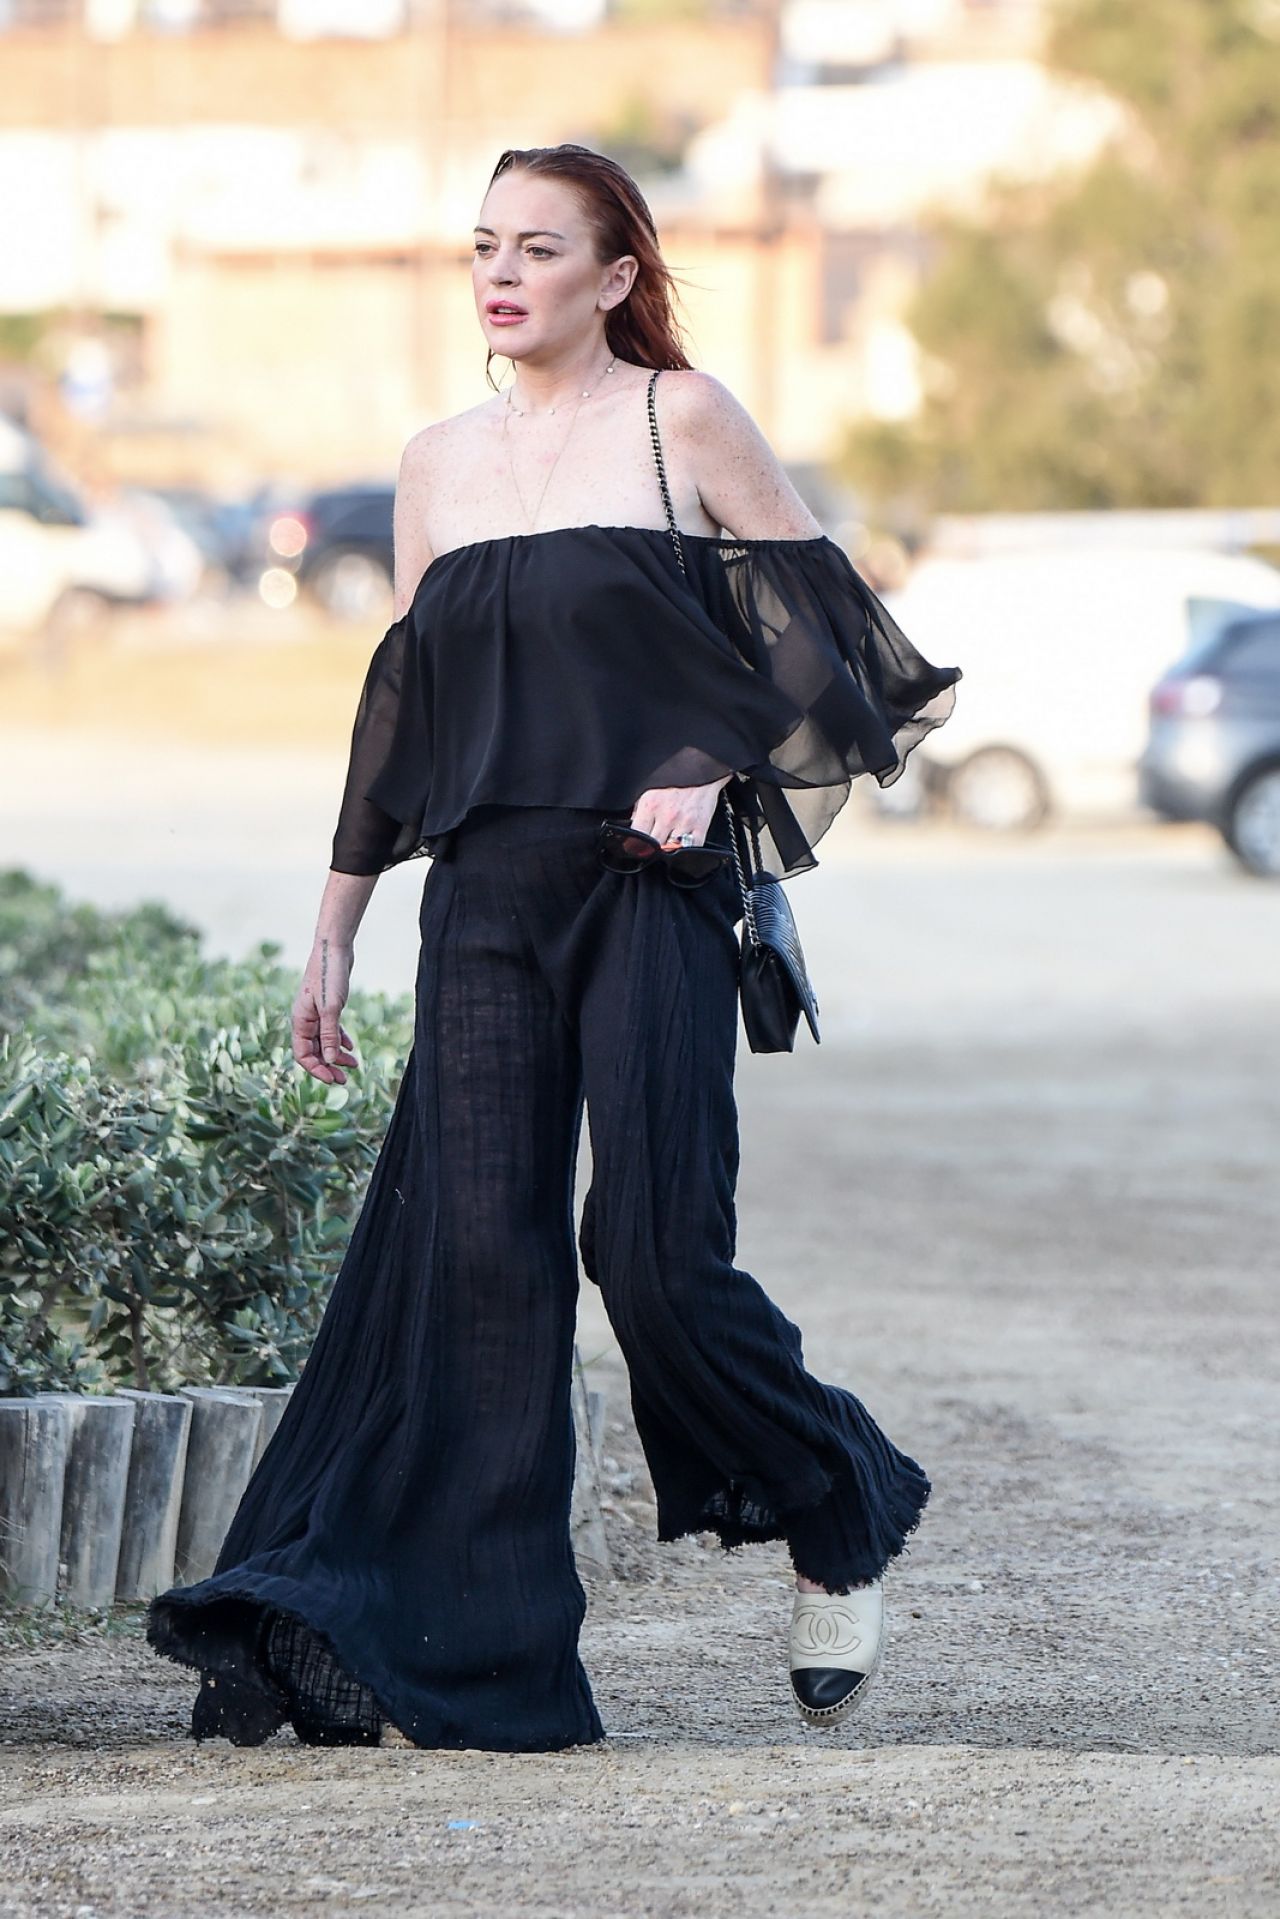 lindsay-lohan-in-a-black-outfit-mykonos-june-2018-0.jpg